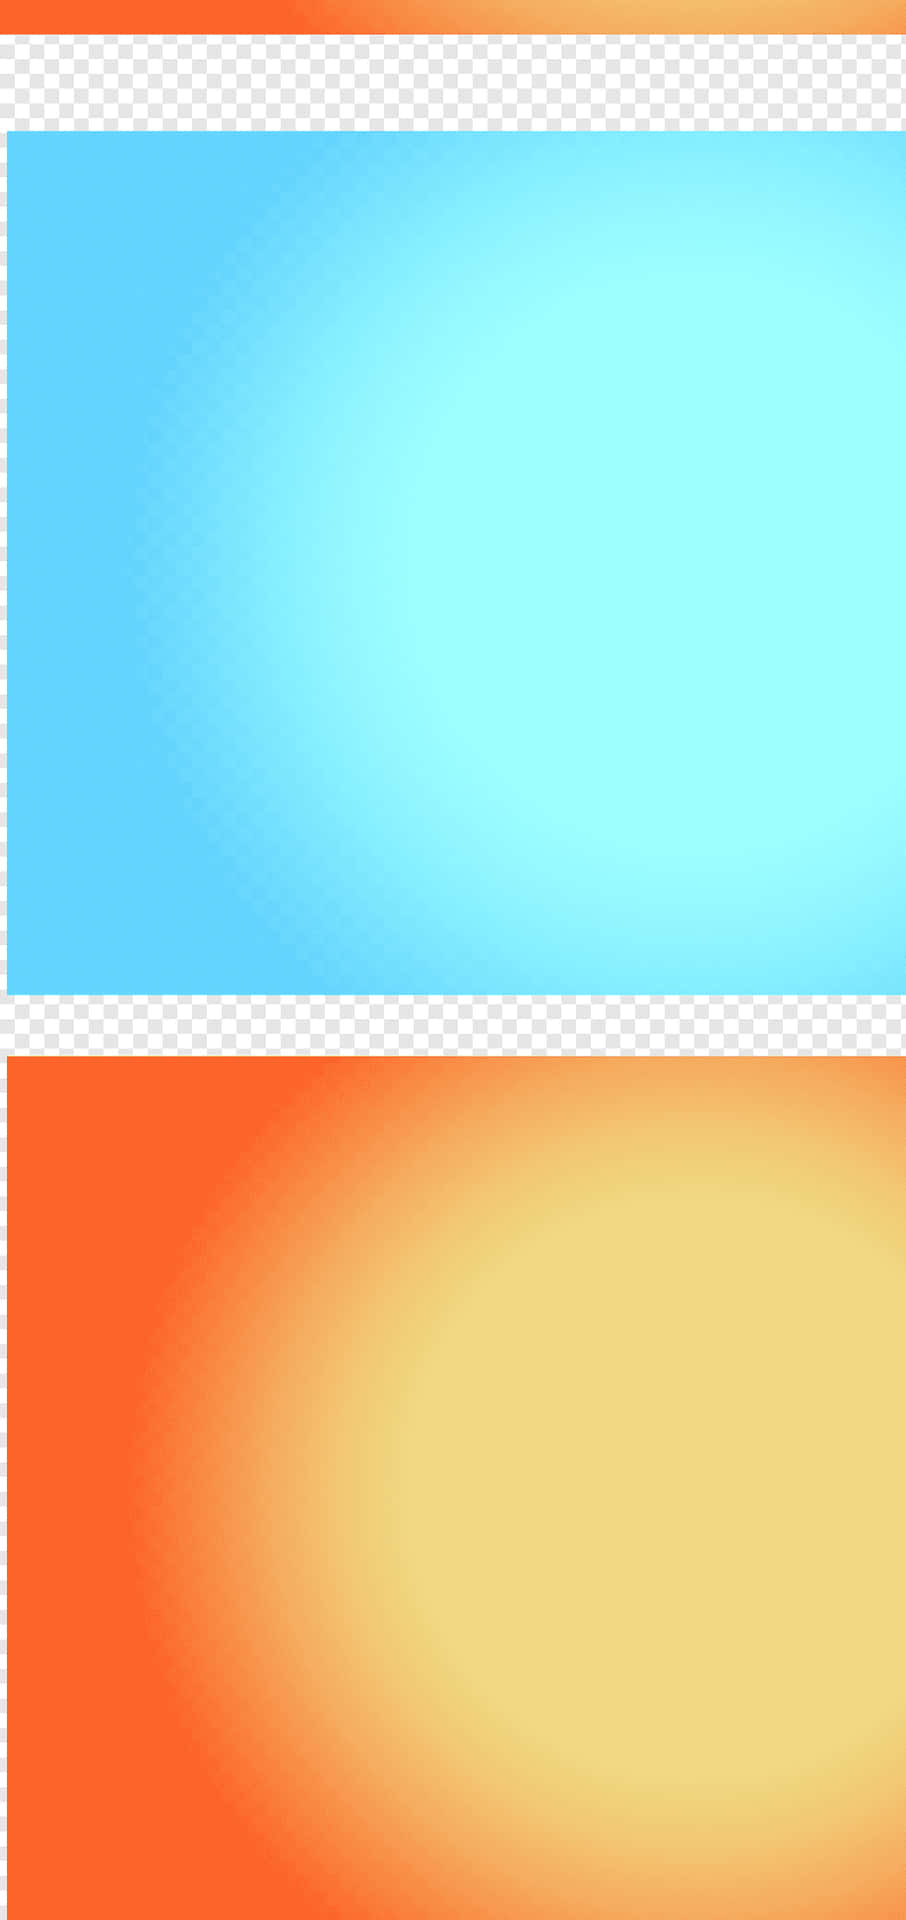 Bright and vibrant orange gradient background